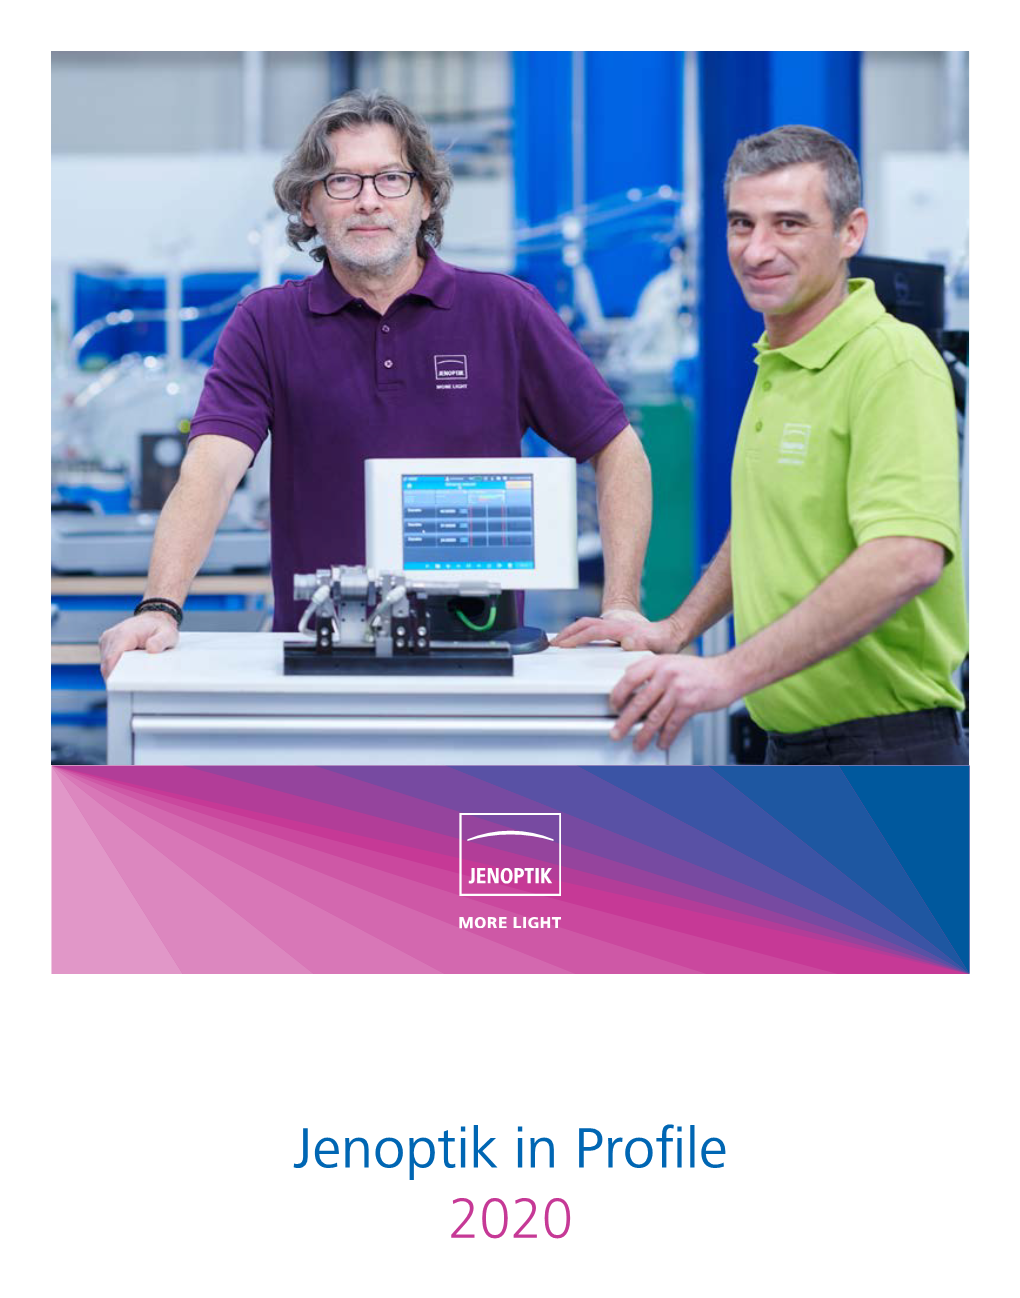 Jenoptik in Profile 2020 Key Locations of the Jenoptik Group